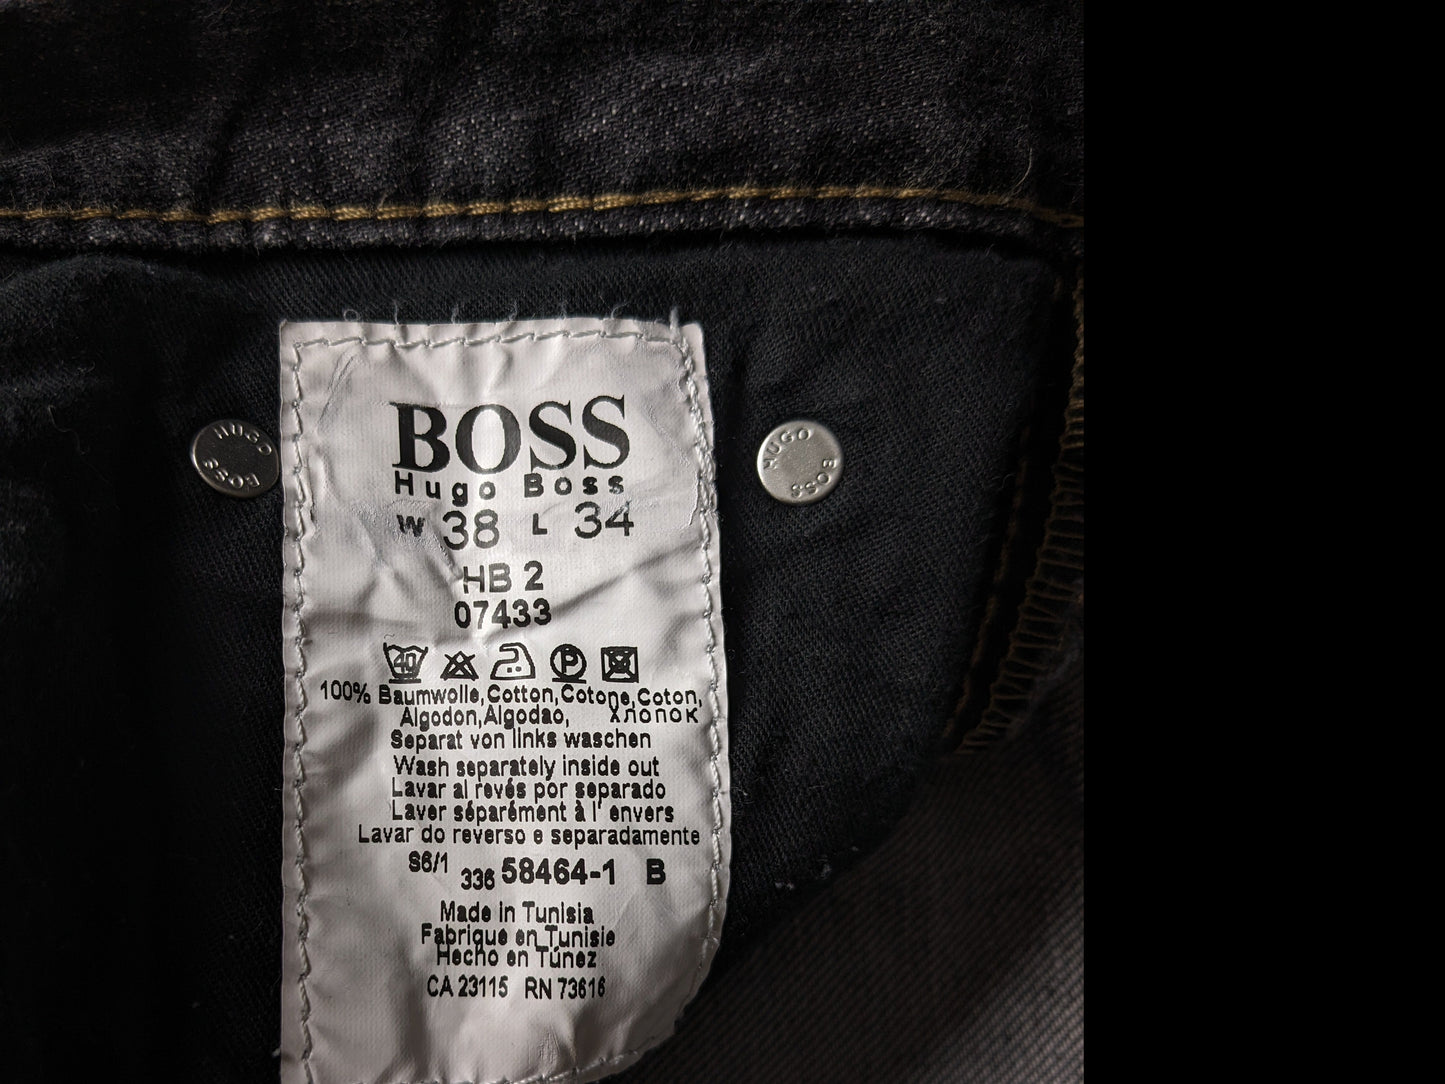 Boss Hugo Boss Jeans. Black colored. Size W38 - L34.